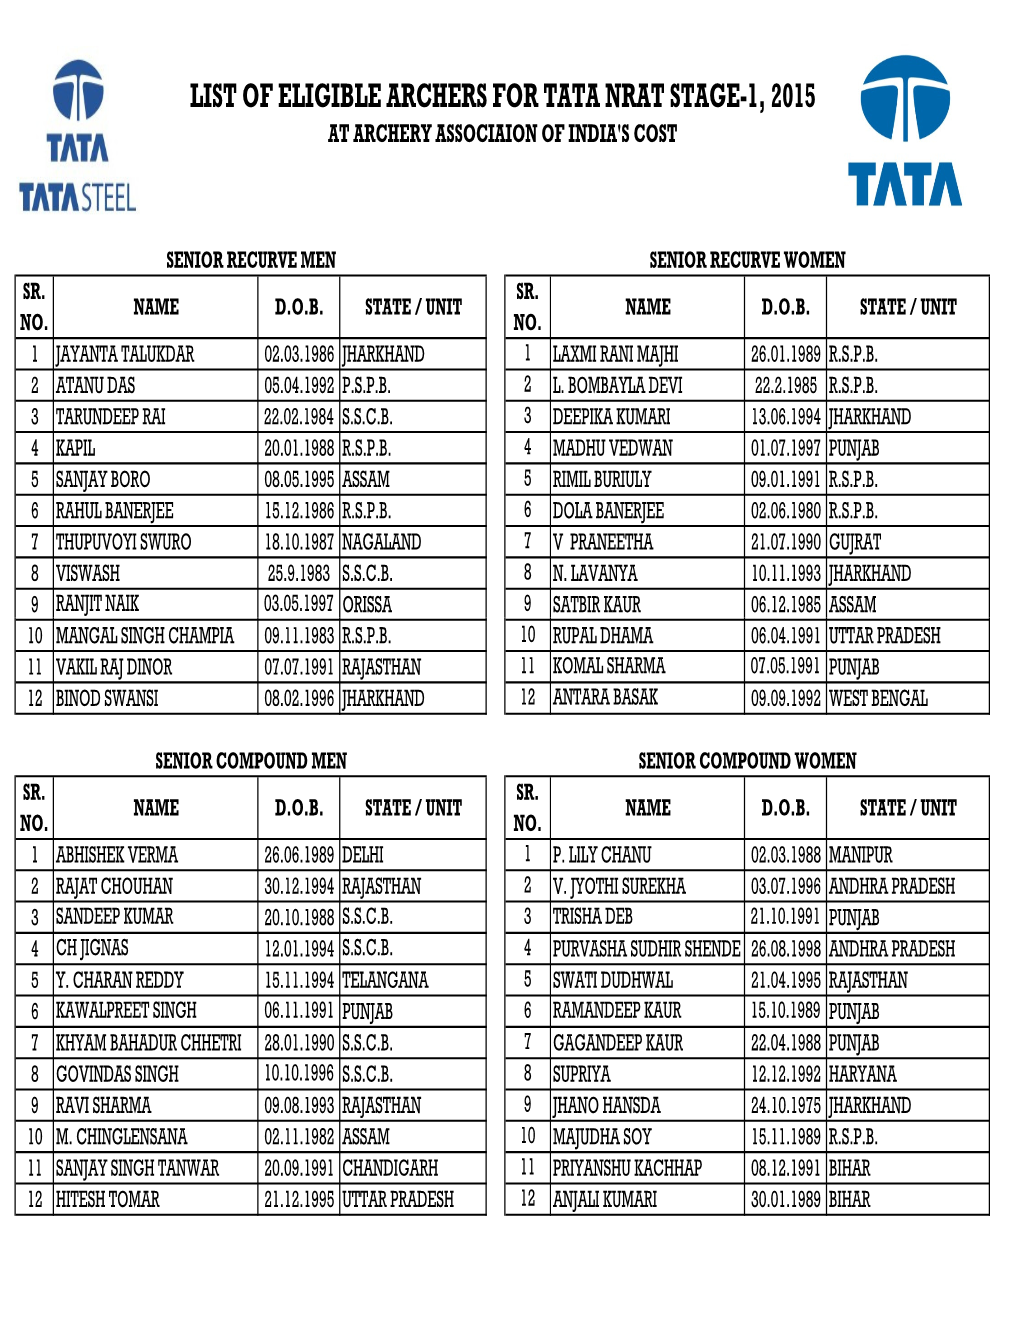 List of Eligible -2015 TATA NRAT Stage-1.Xlsx